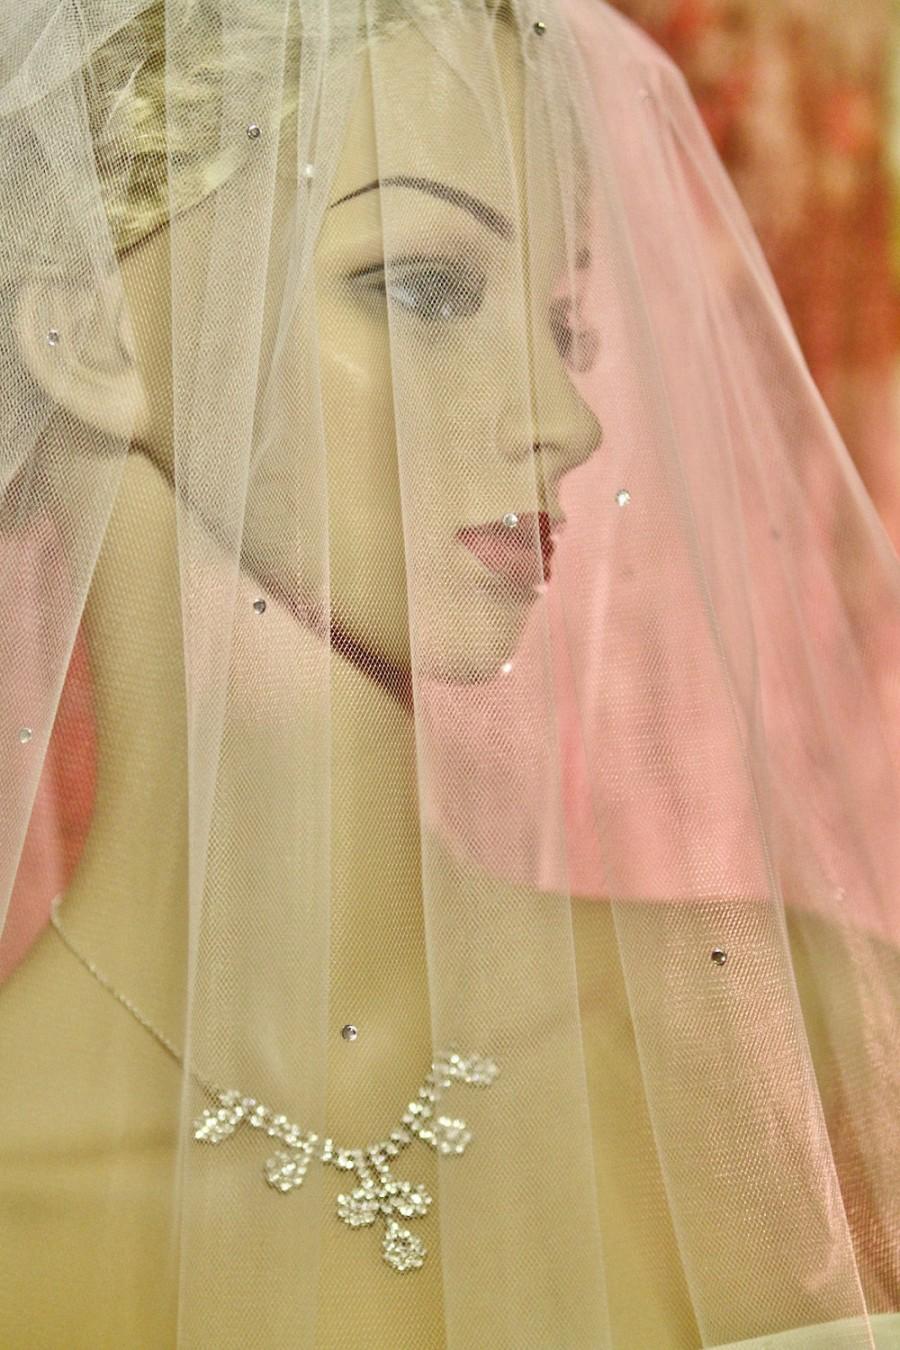 Wedding - WALTZ DOUBLE Sided Scattered RHINESTONES Veil, 2-Tier, Very Beautiful